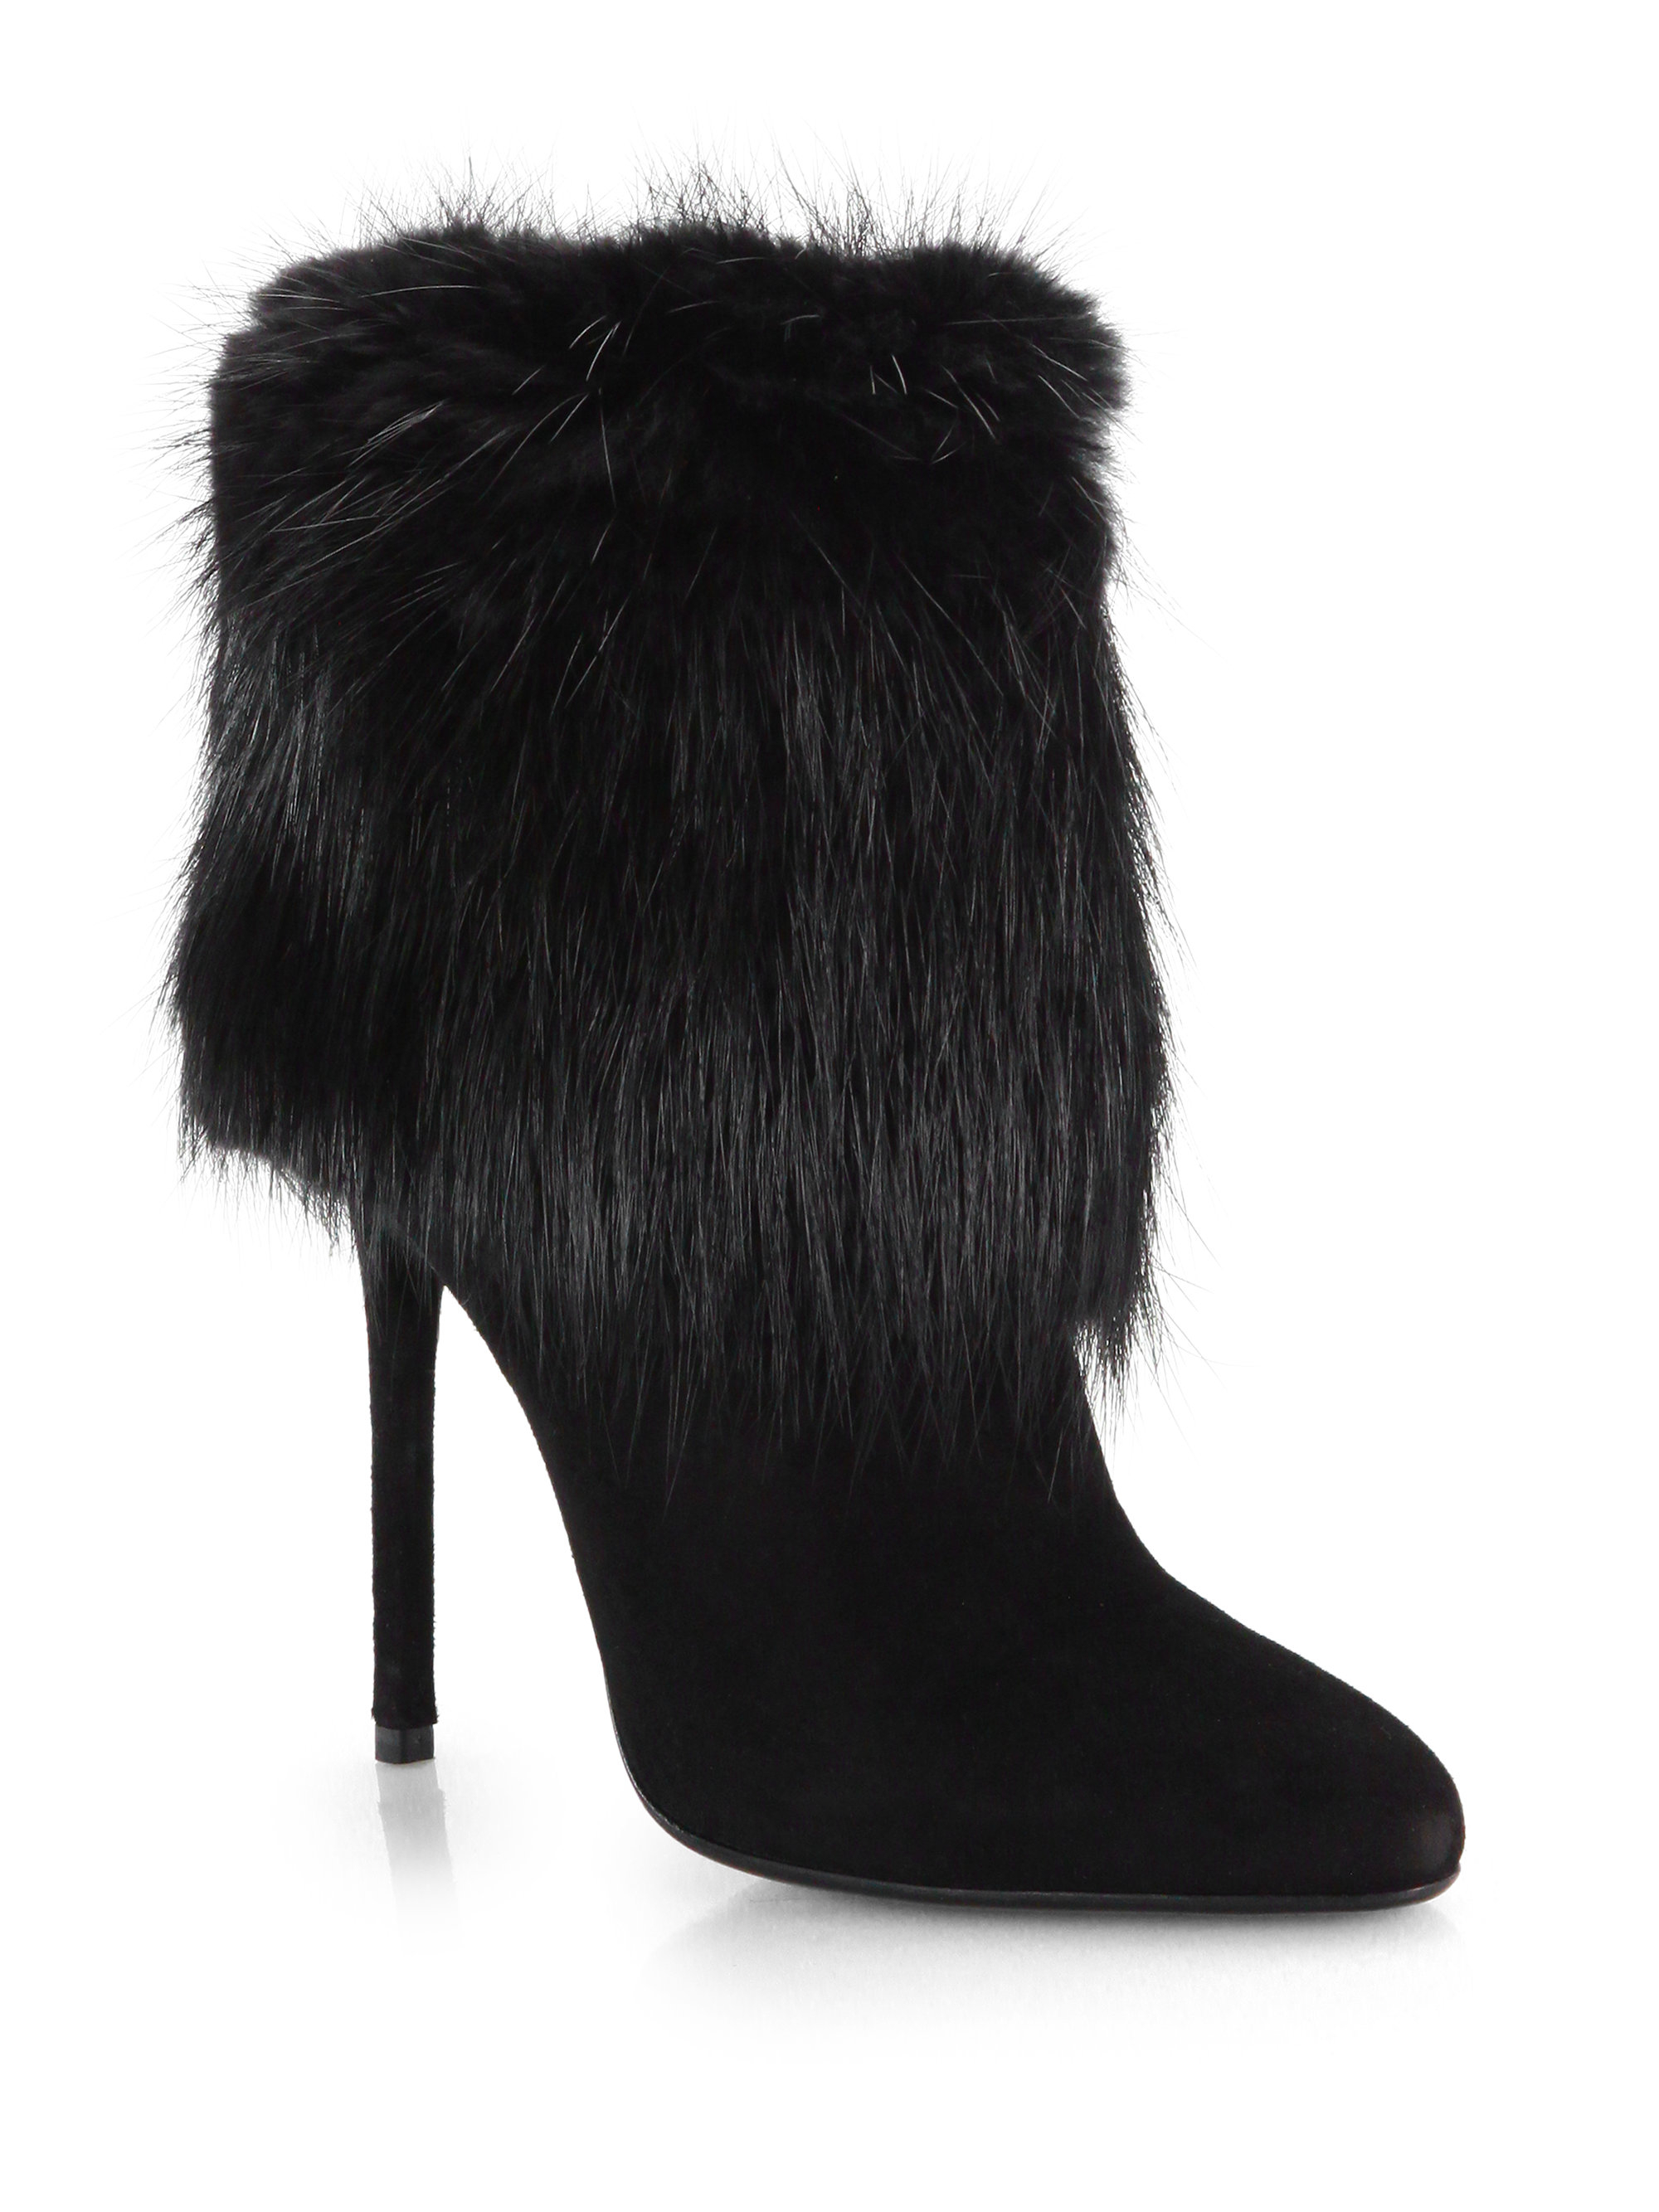 Lyst - Prada Suede Fur Ankle Boots in Black